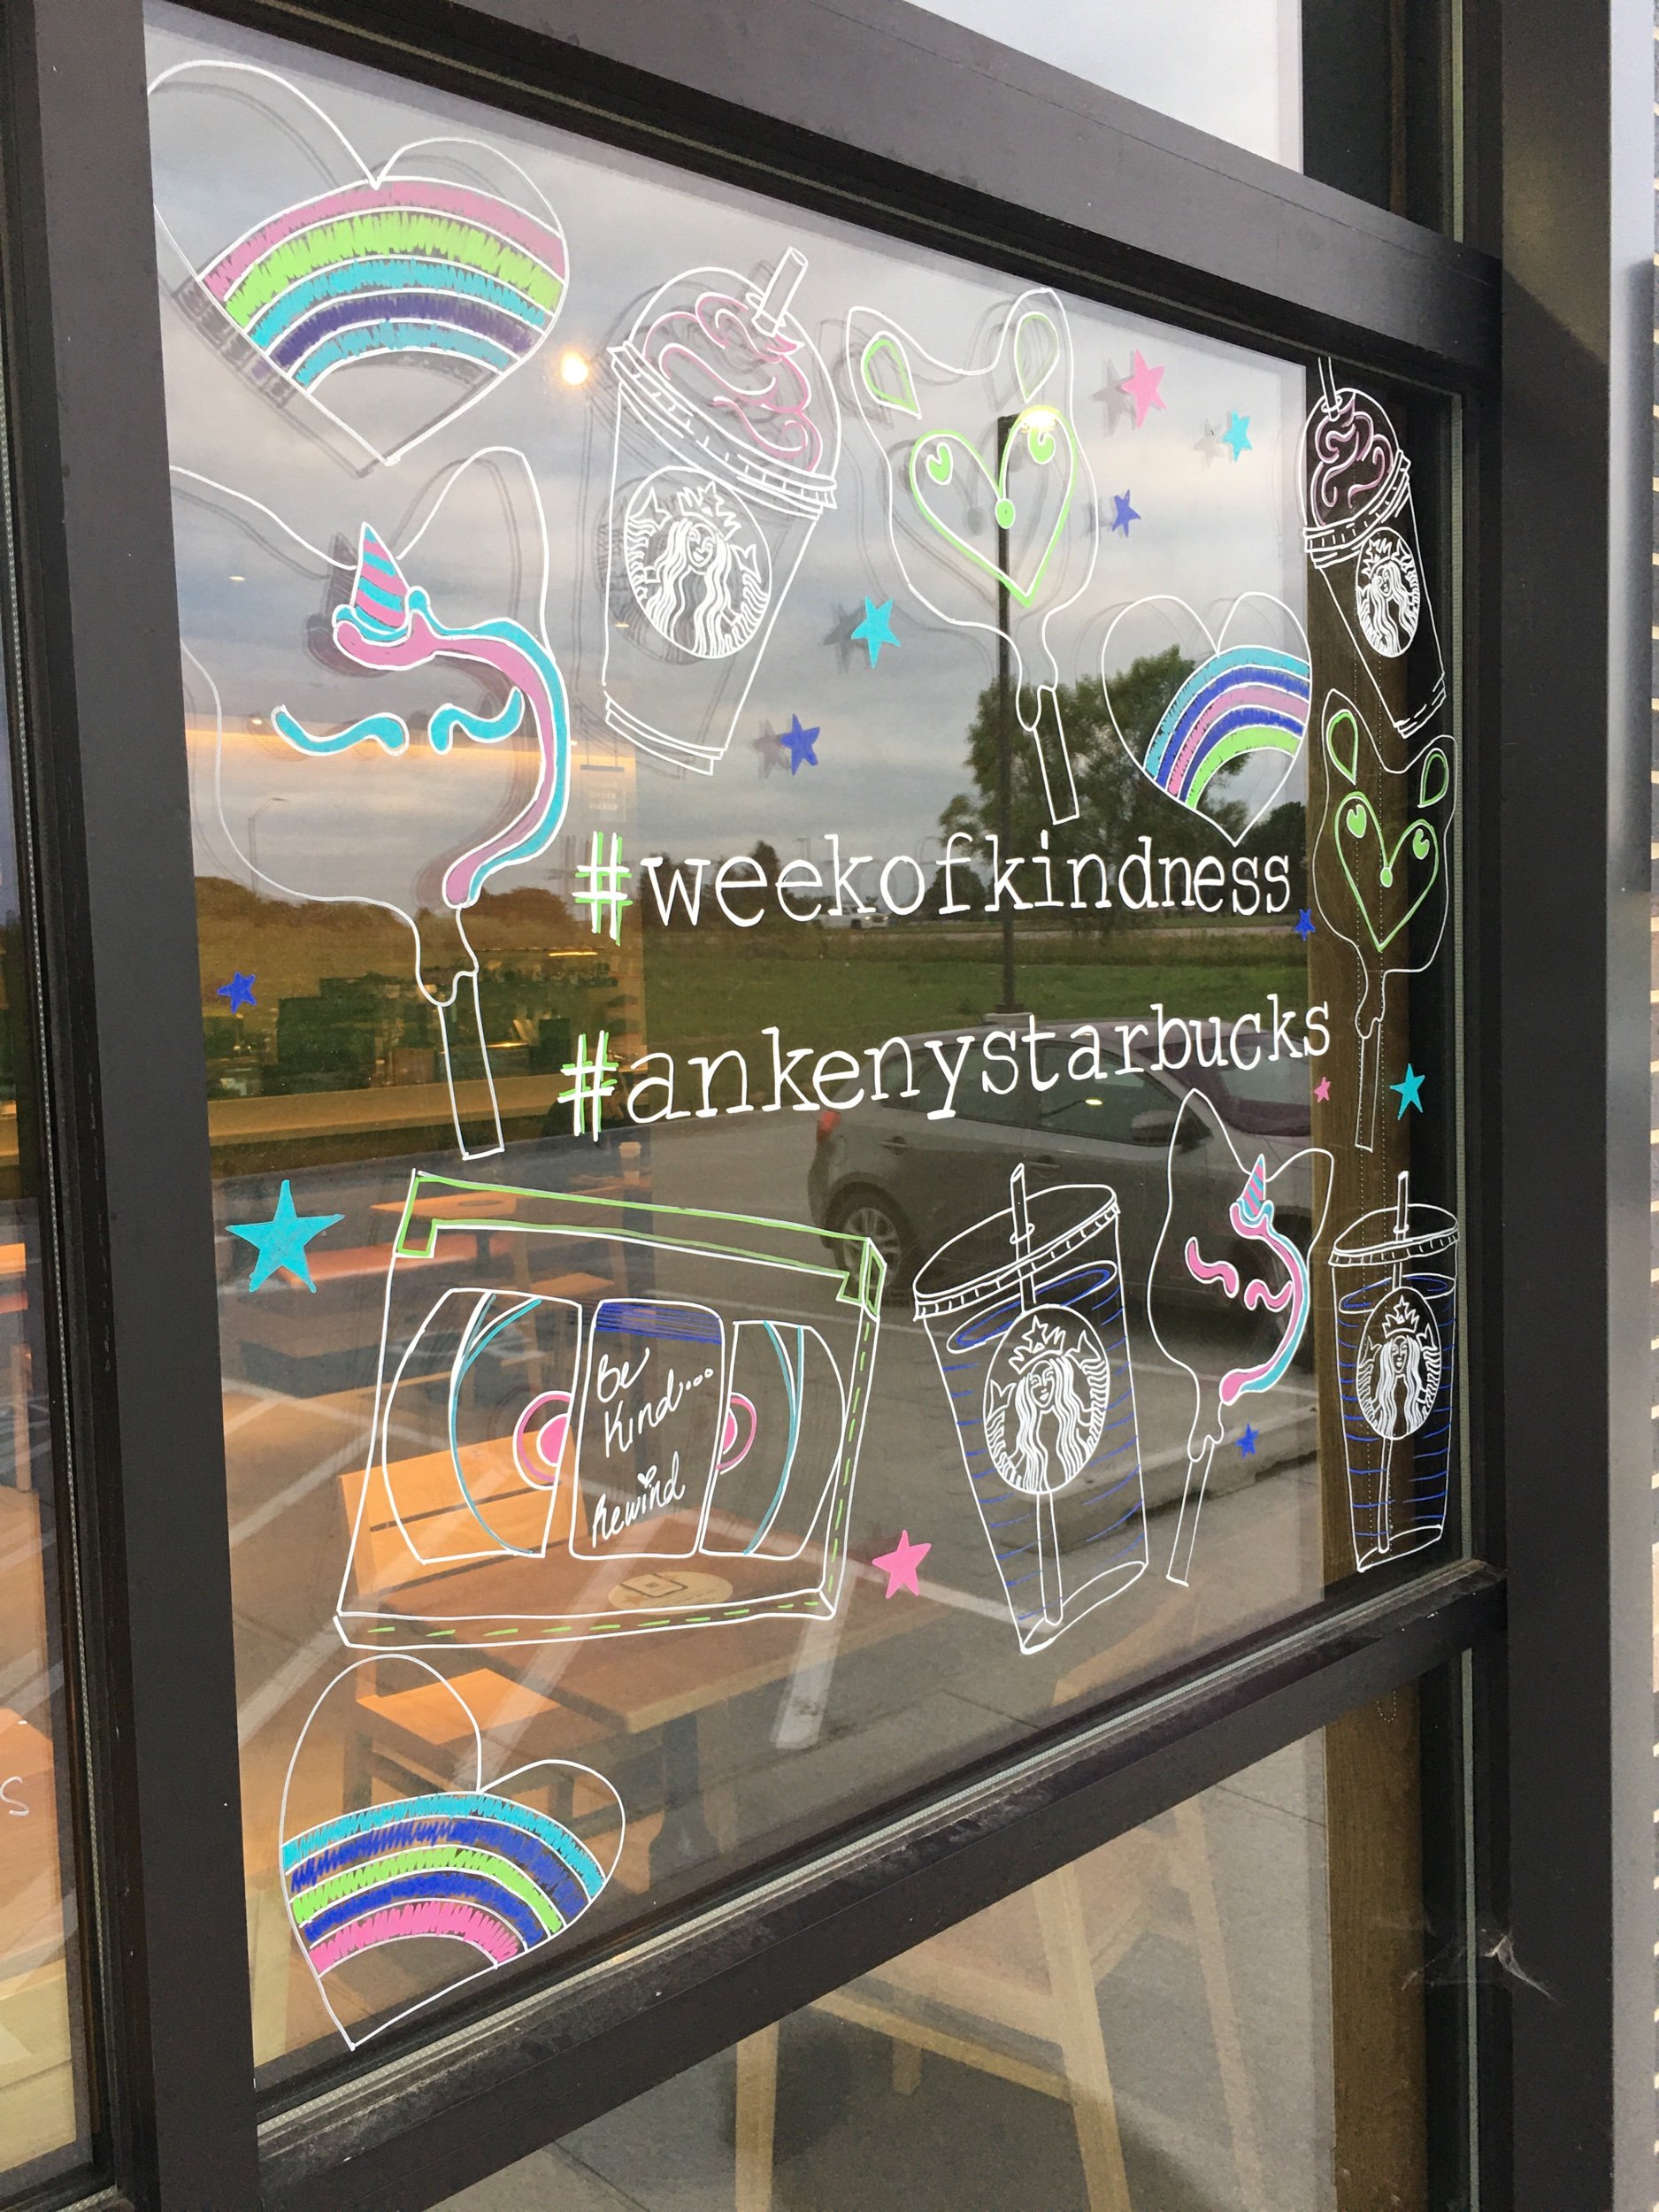 Starbucks Week of Kindness